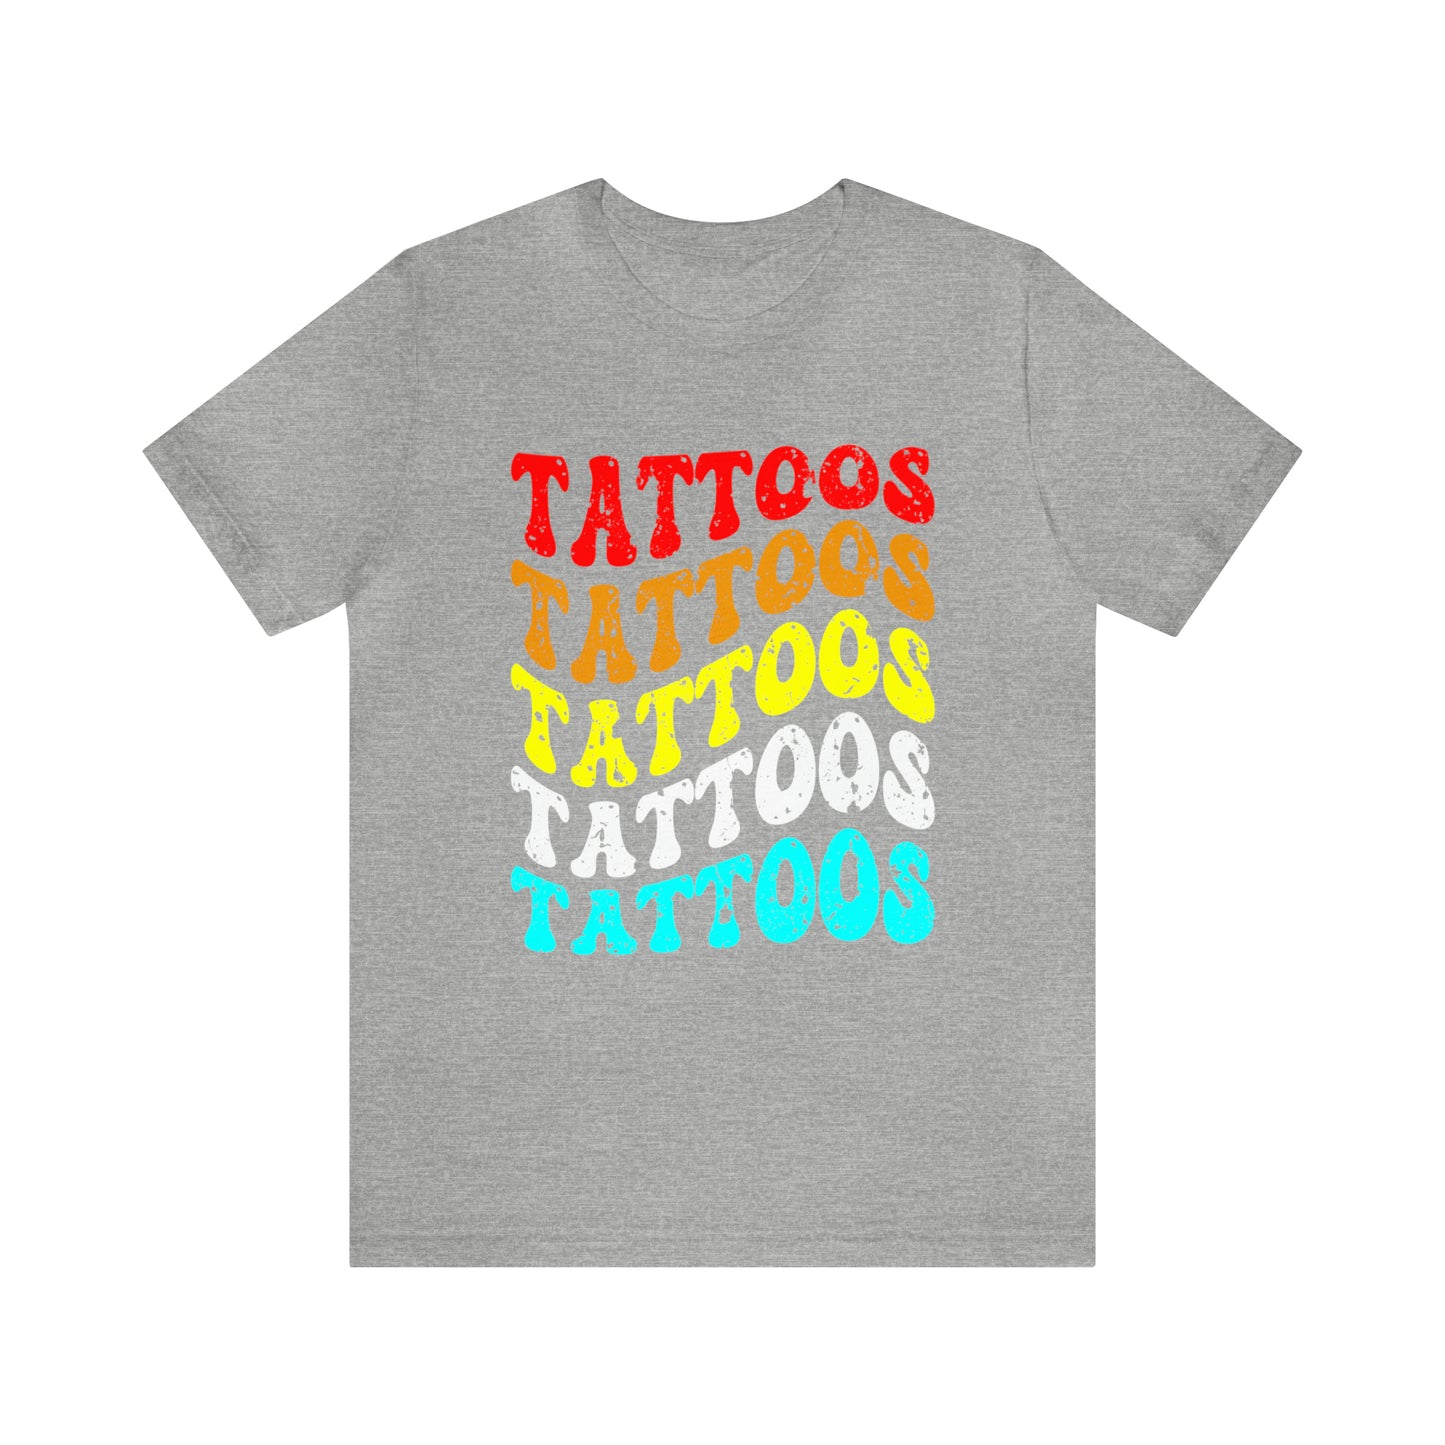 Men's, Tattoos Tattoos Tattoos, Retro Tattoo Font, Tattoo Lifestyle and Fashion